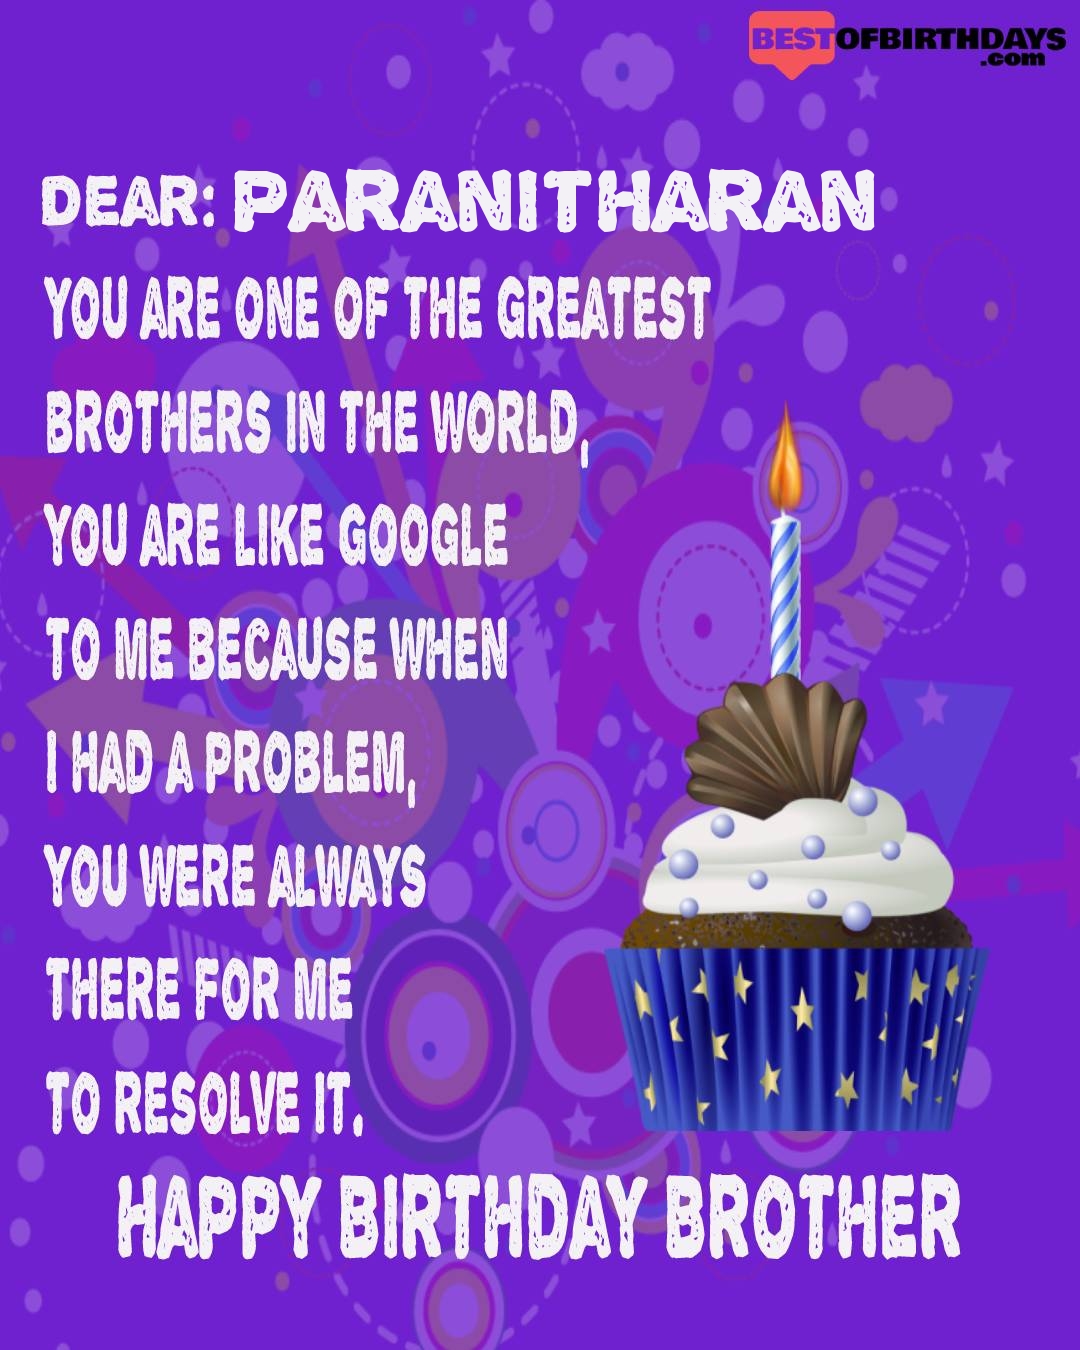 Happy birthday paranitharan bhai brother bro